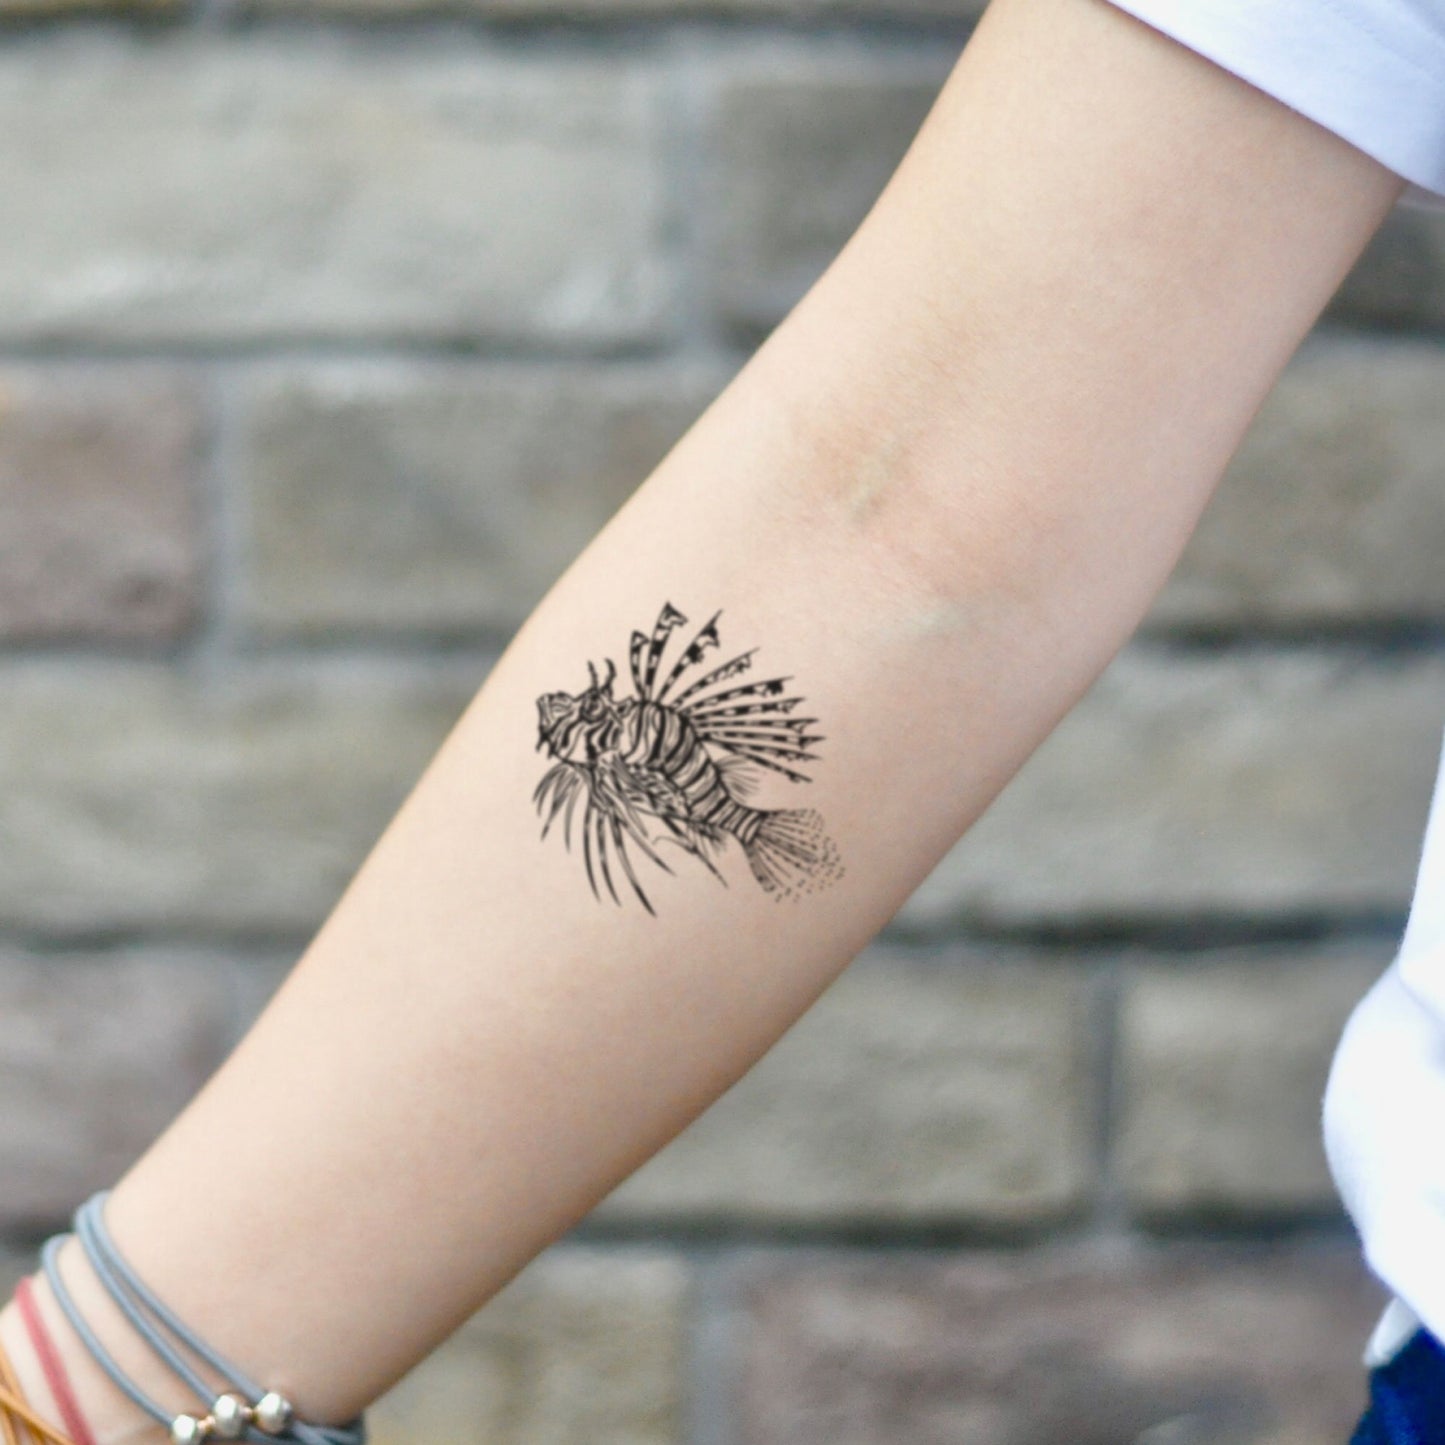 fake small lionfish animal temporary tattoo sticker design idea on inner arm